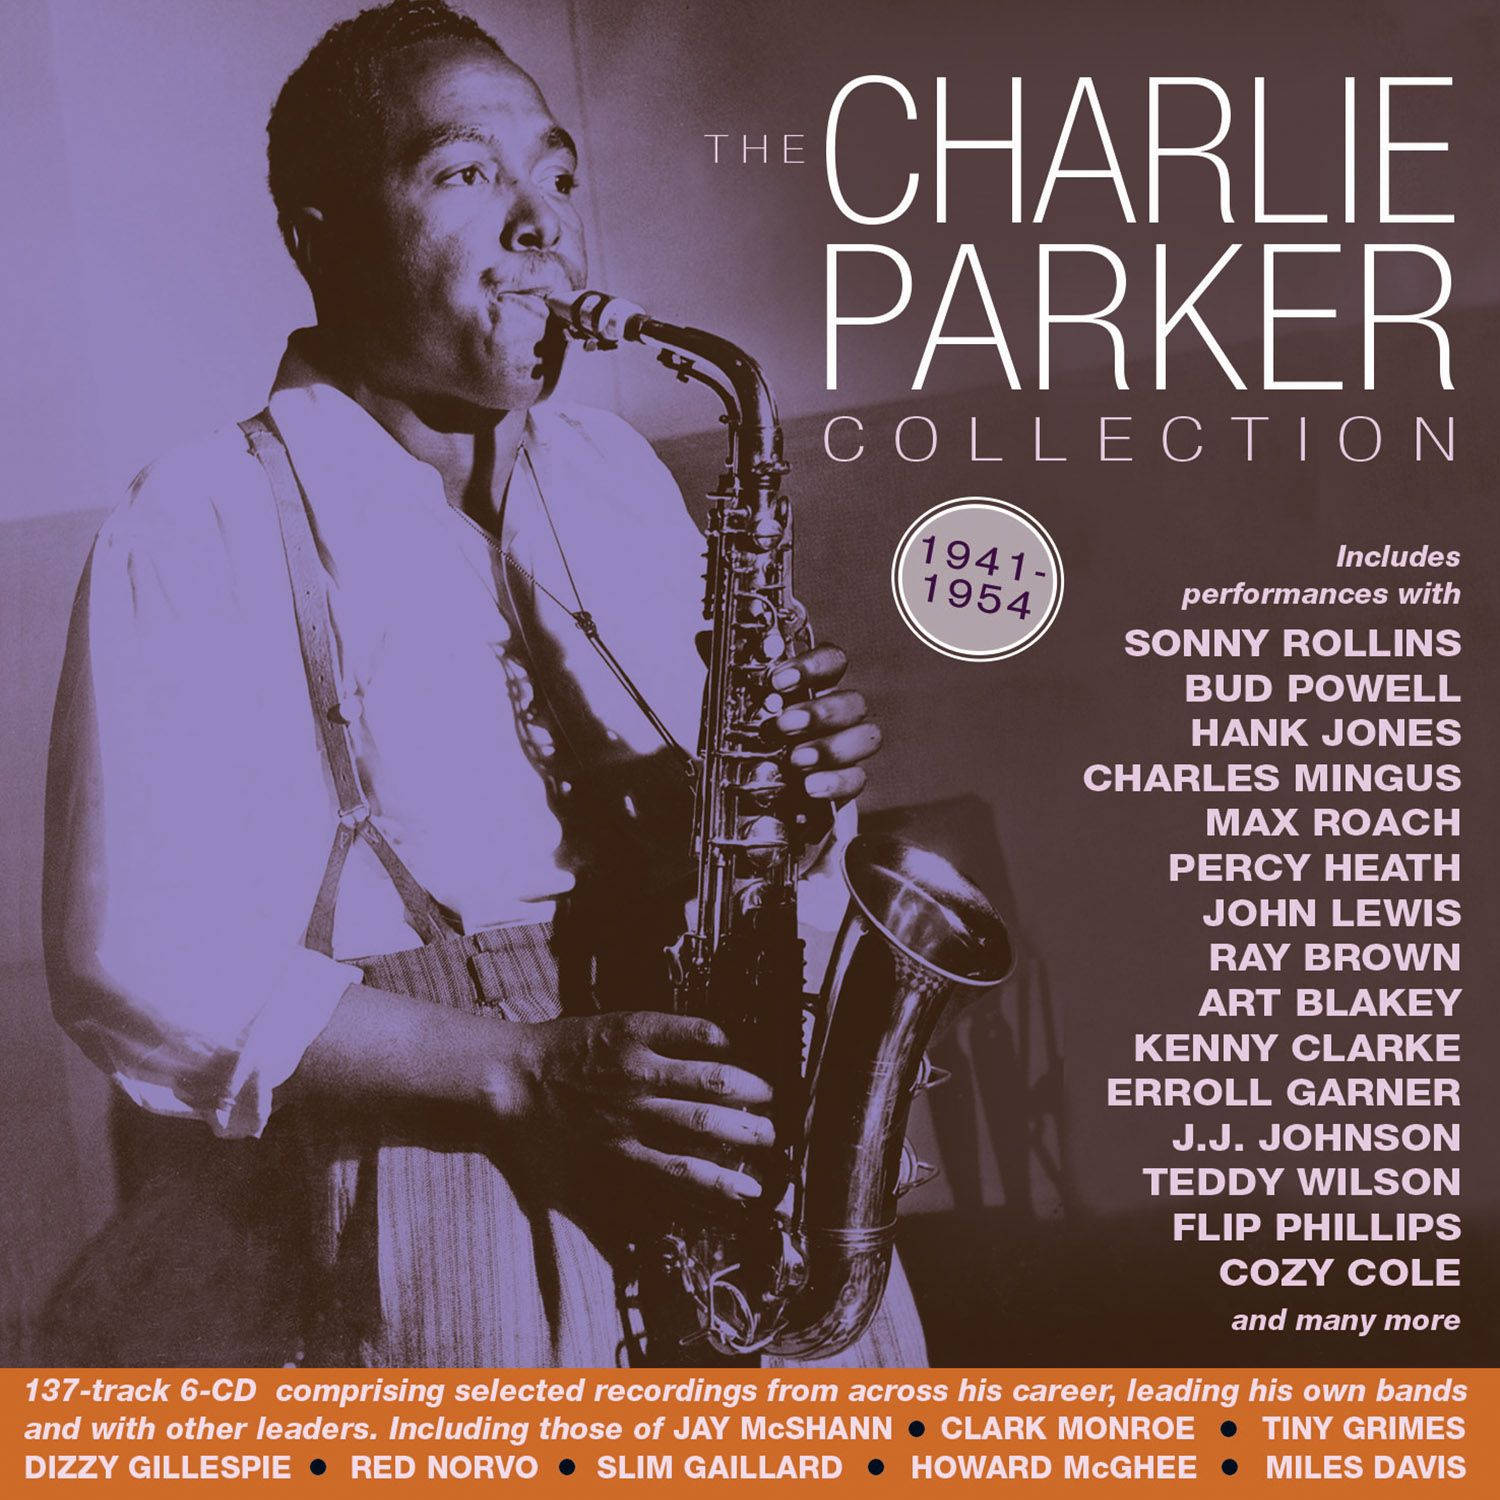 Charlie Parker Album Sammlung Cover Wallpaper